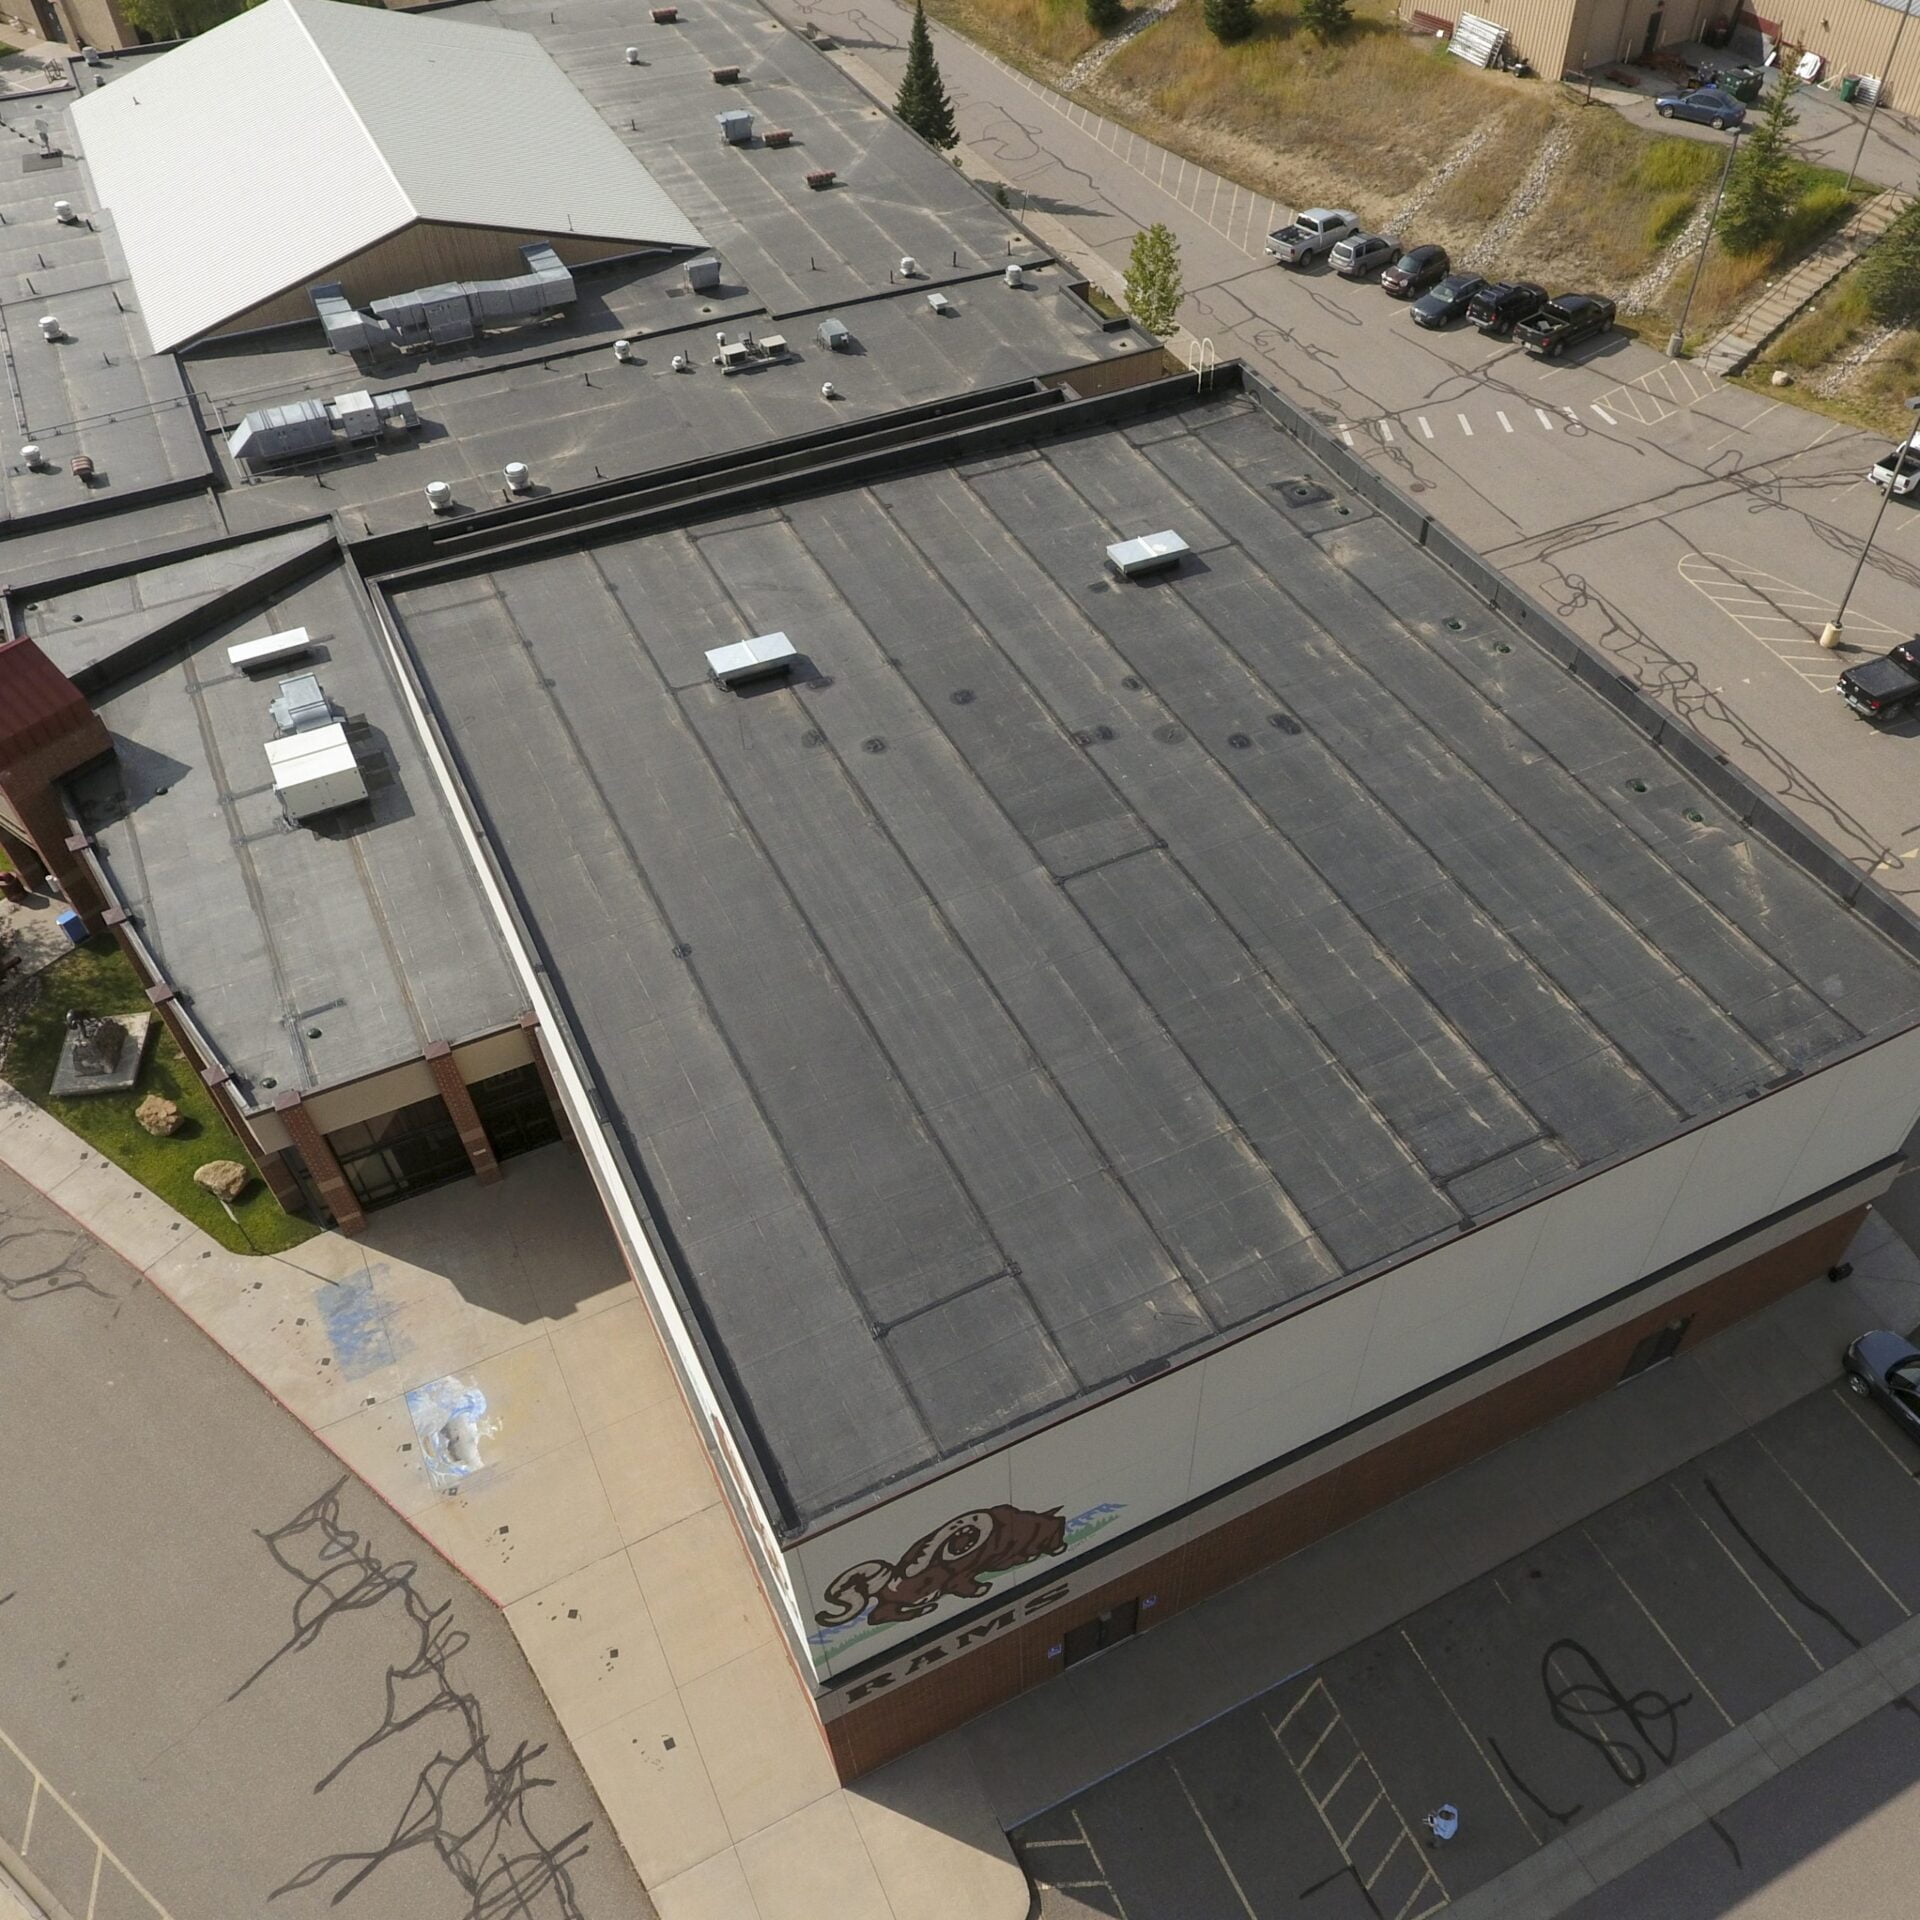 Image shot at Soroco High School, Oak Creek, Colorado, September 18, 2020, Completed Drone Shots, Jeffrey Parr/Supreme Roofing